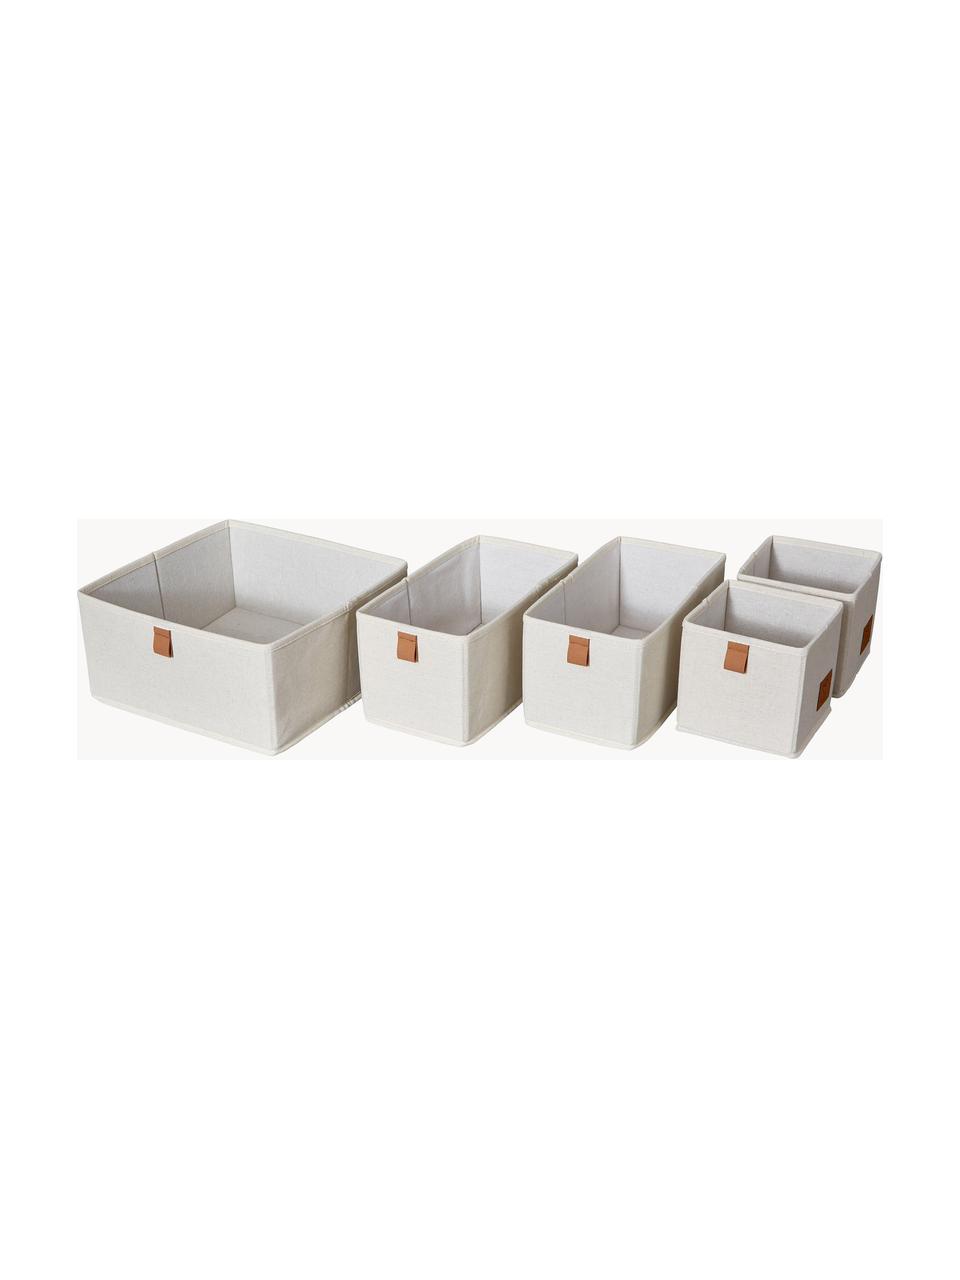 Set 5 scatole premium, Beige chiaro, marrone, Set in varie misure